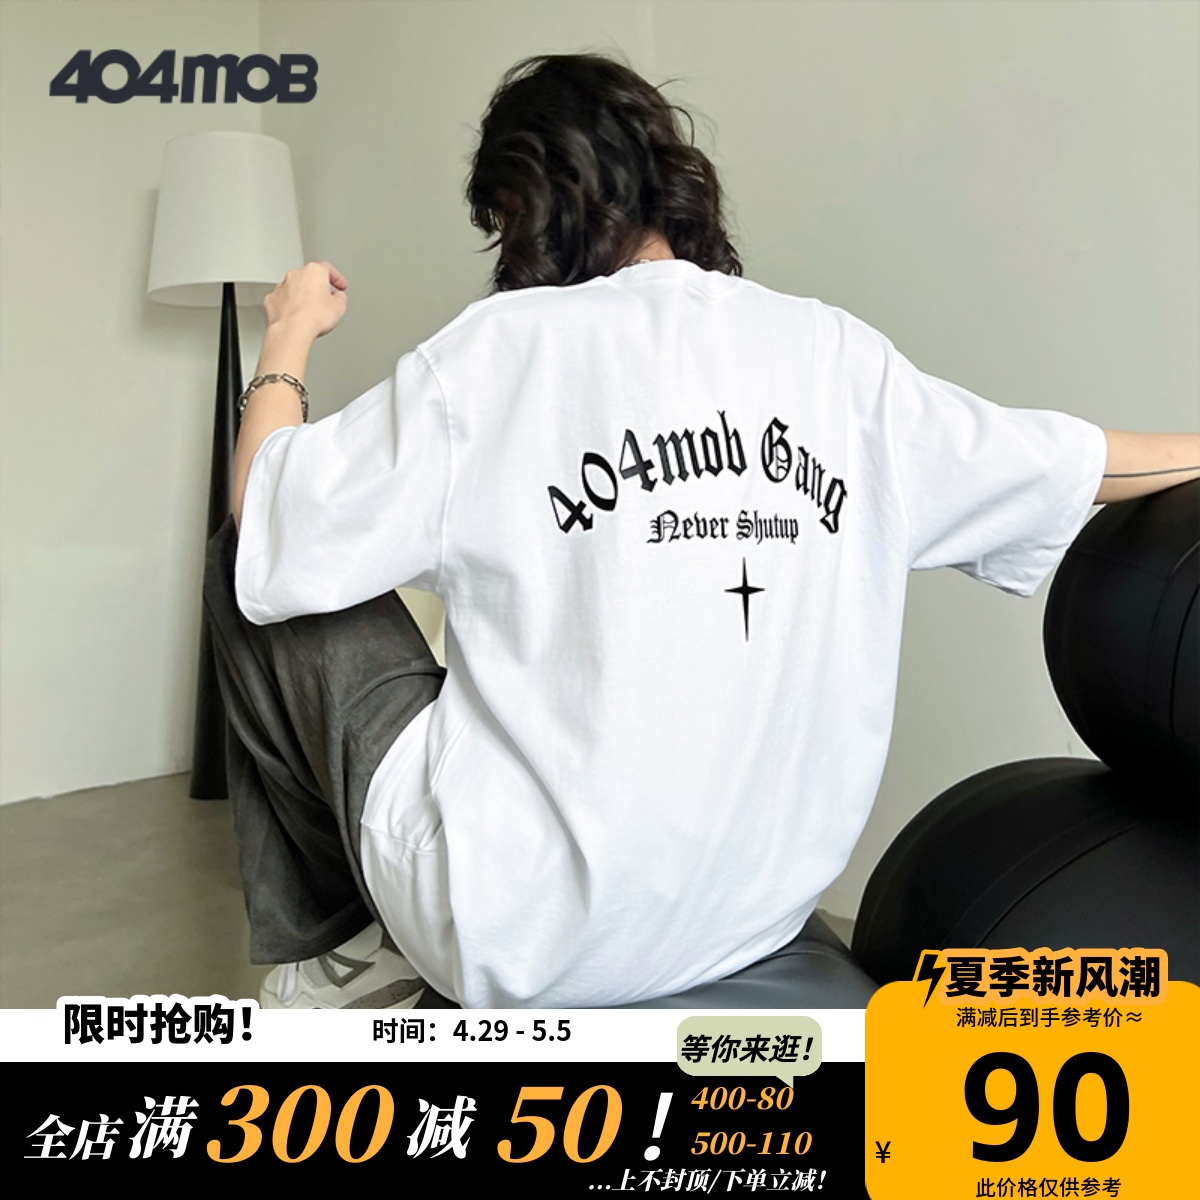 404MOB夏新款美式复古短袖t恤男十字印花潮牌宽松打底衫半袖体恤